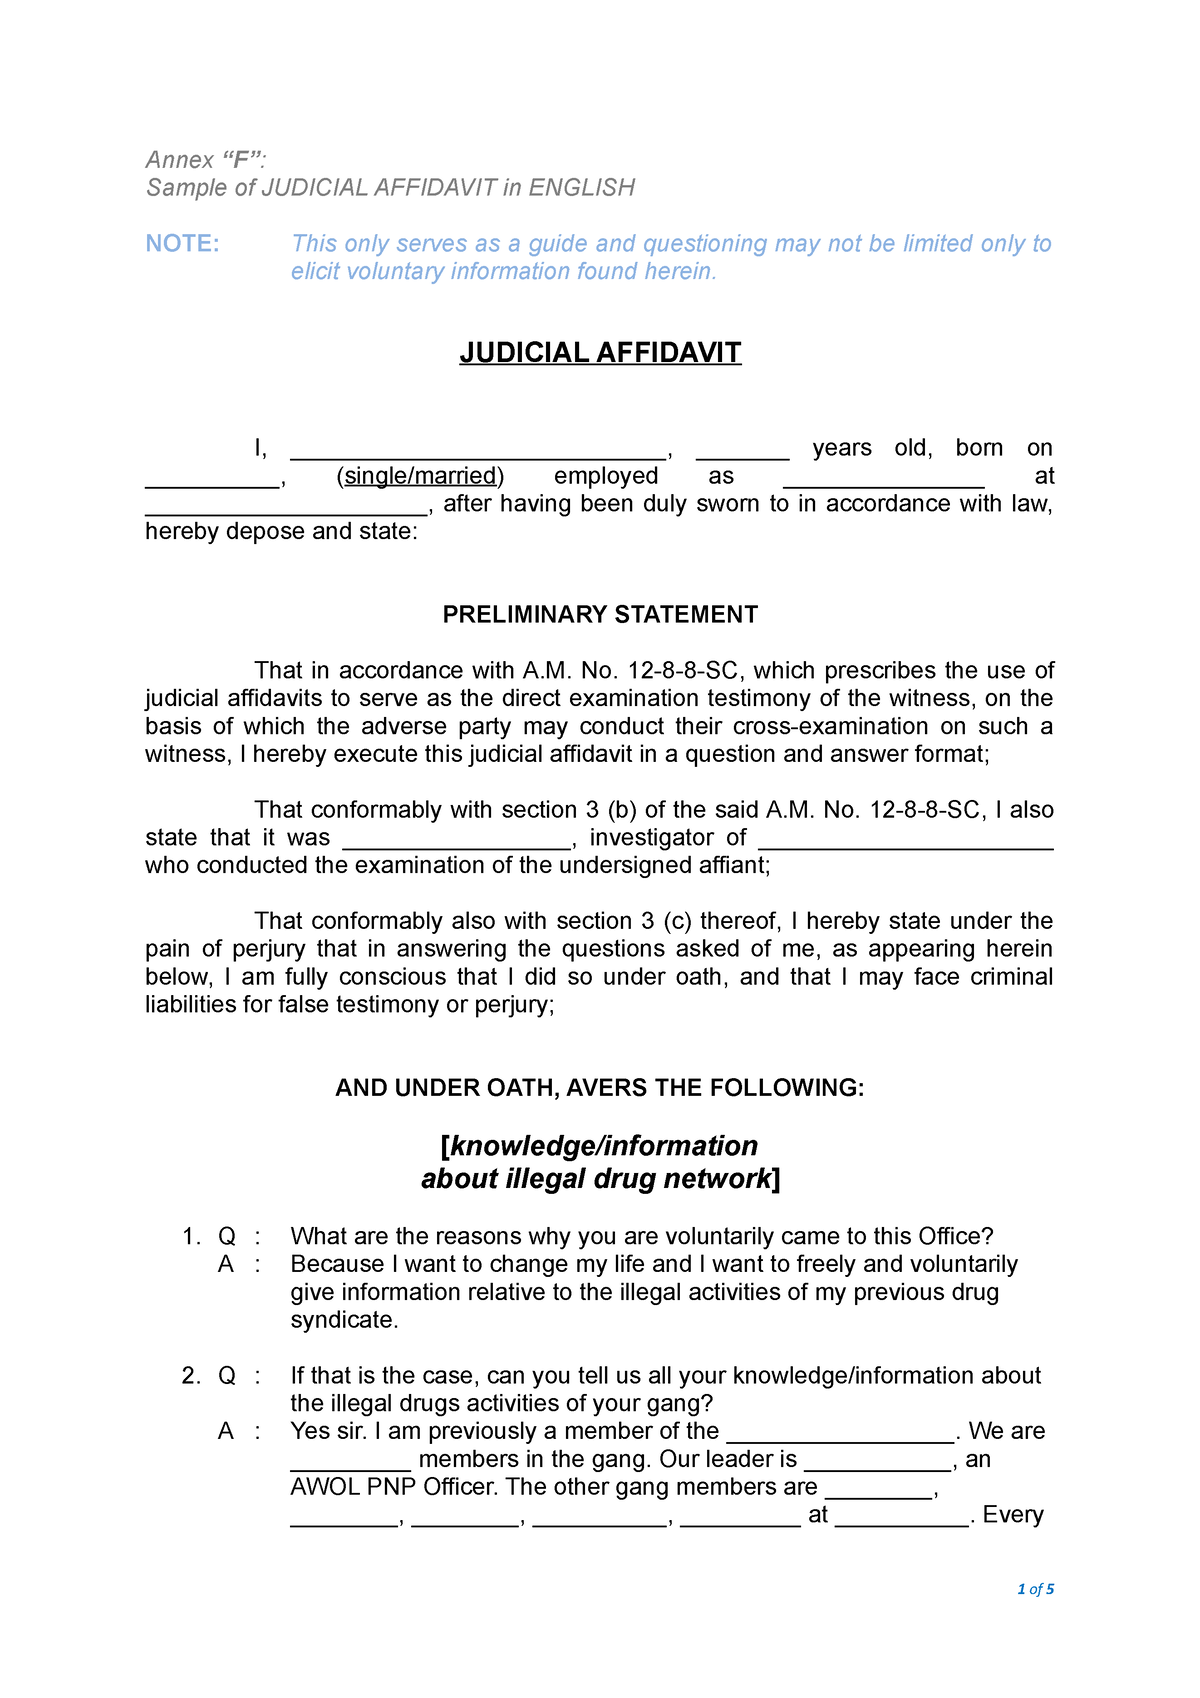 Sample Format Of Judicial Affidavit English Annex “f” Sample Of Judicial Affidavit In 4965